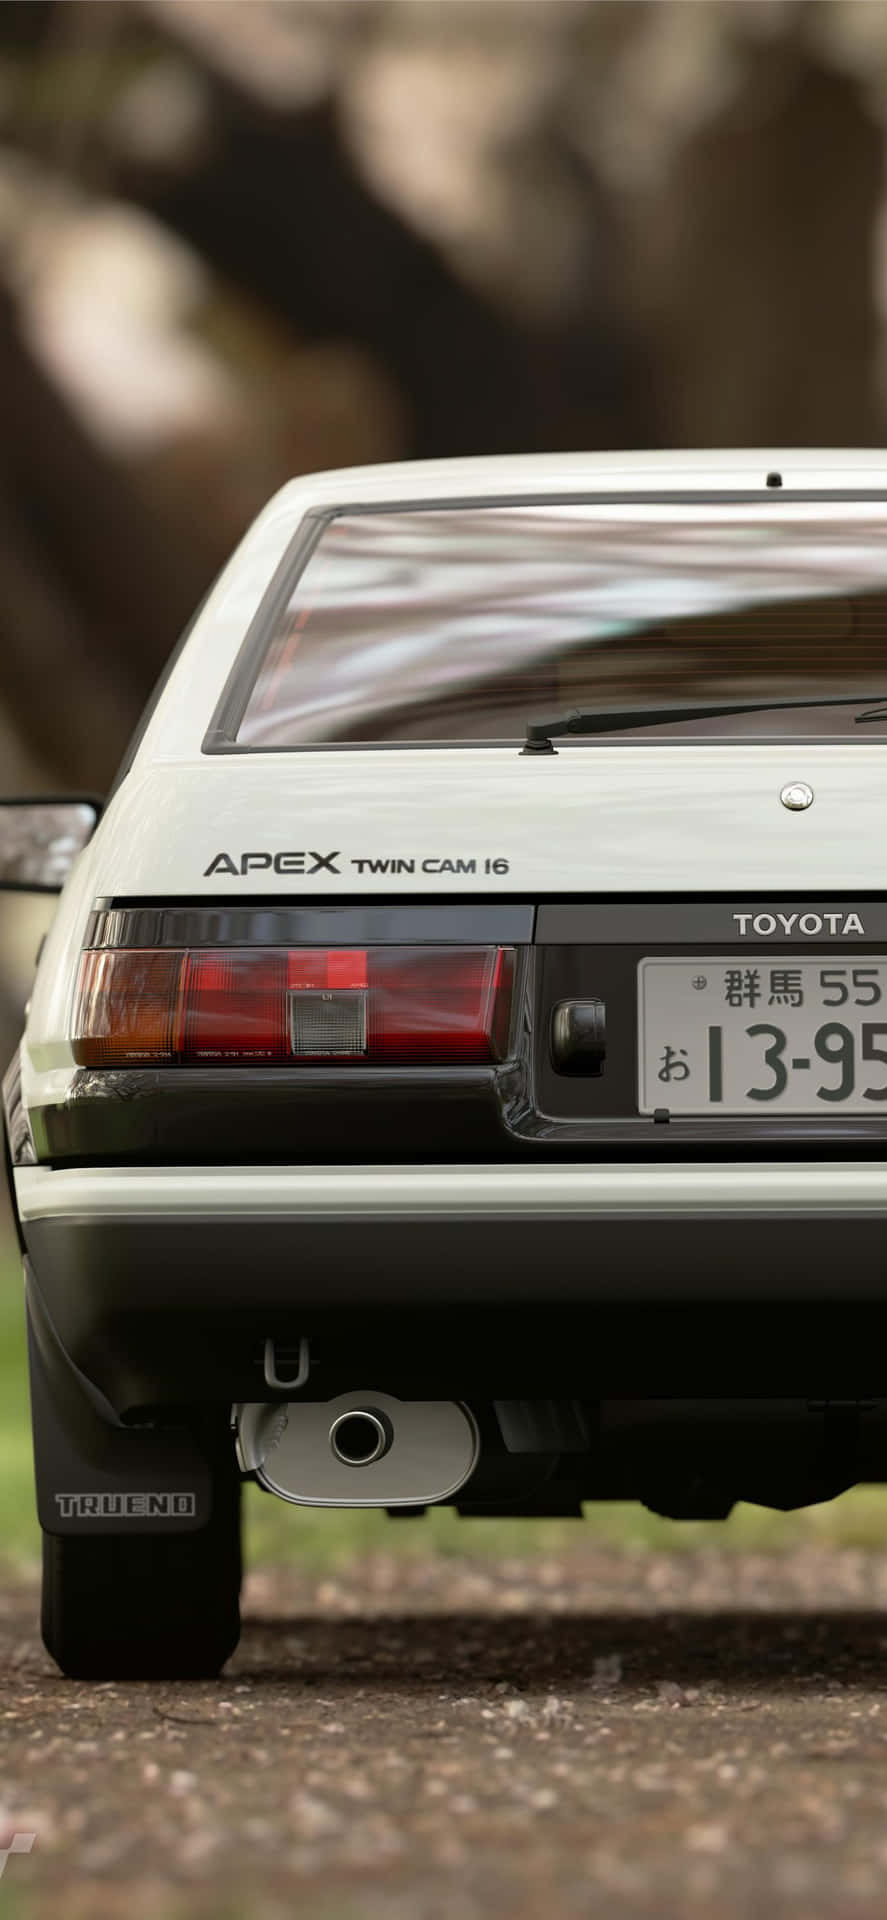 Toyota AE86, a truly classic car Wallpaper